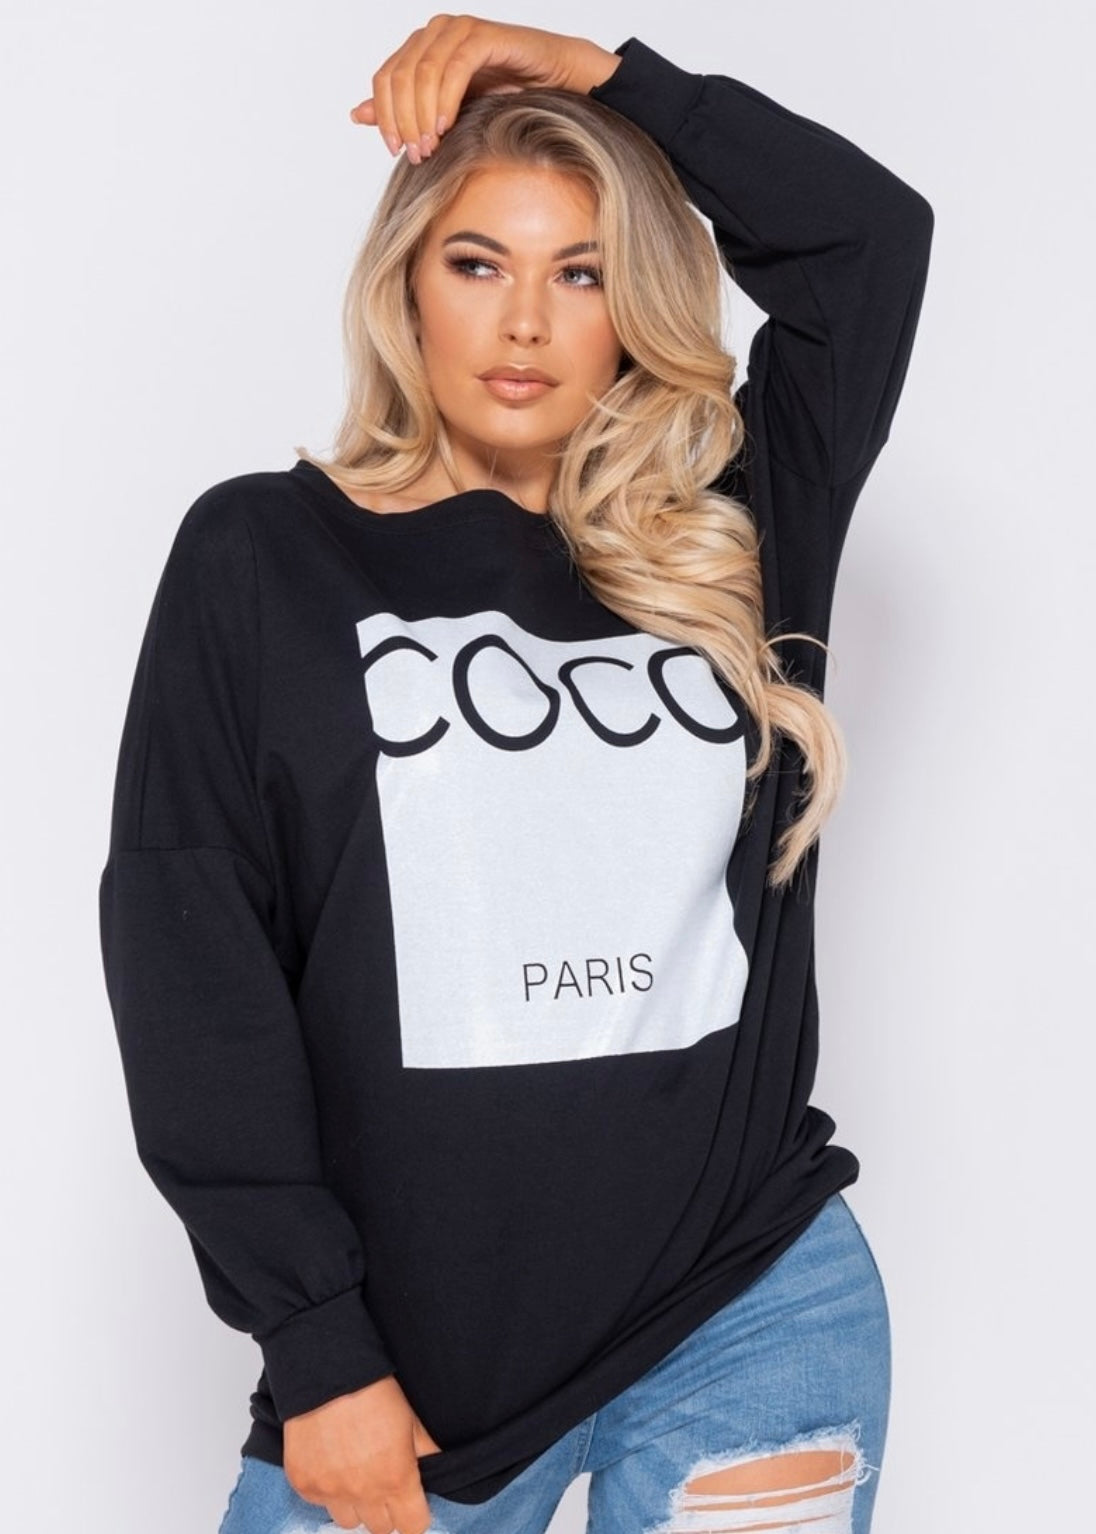 Coco Couture Sweatshirt